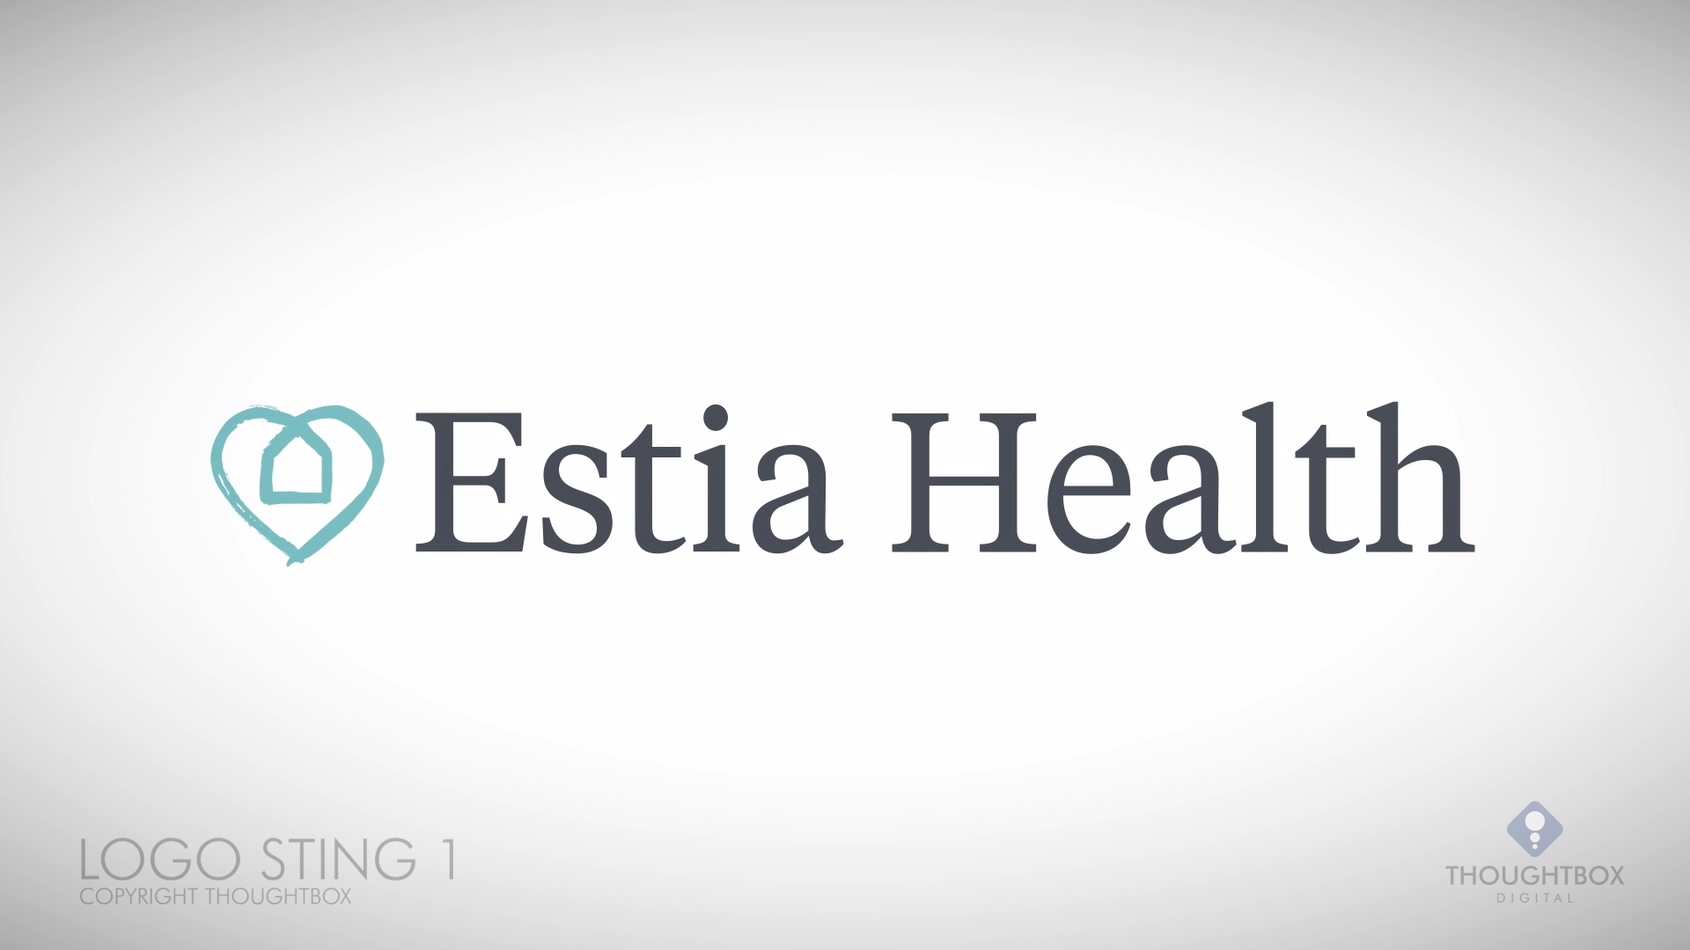 Estia Health - Logo Sting